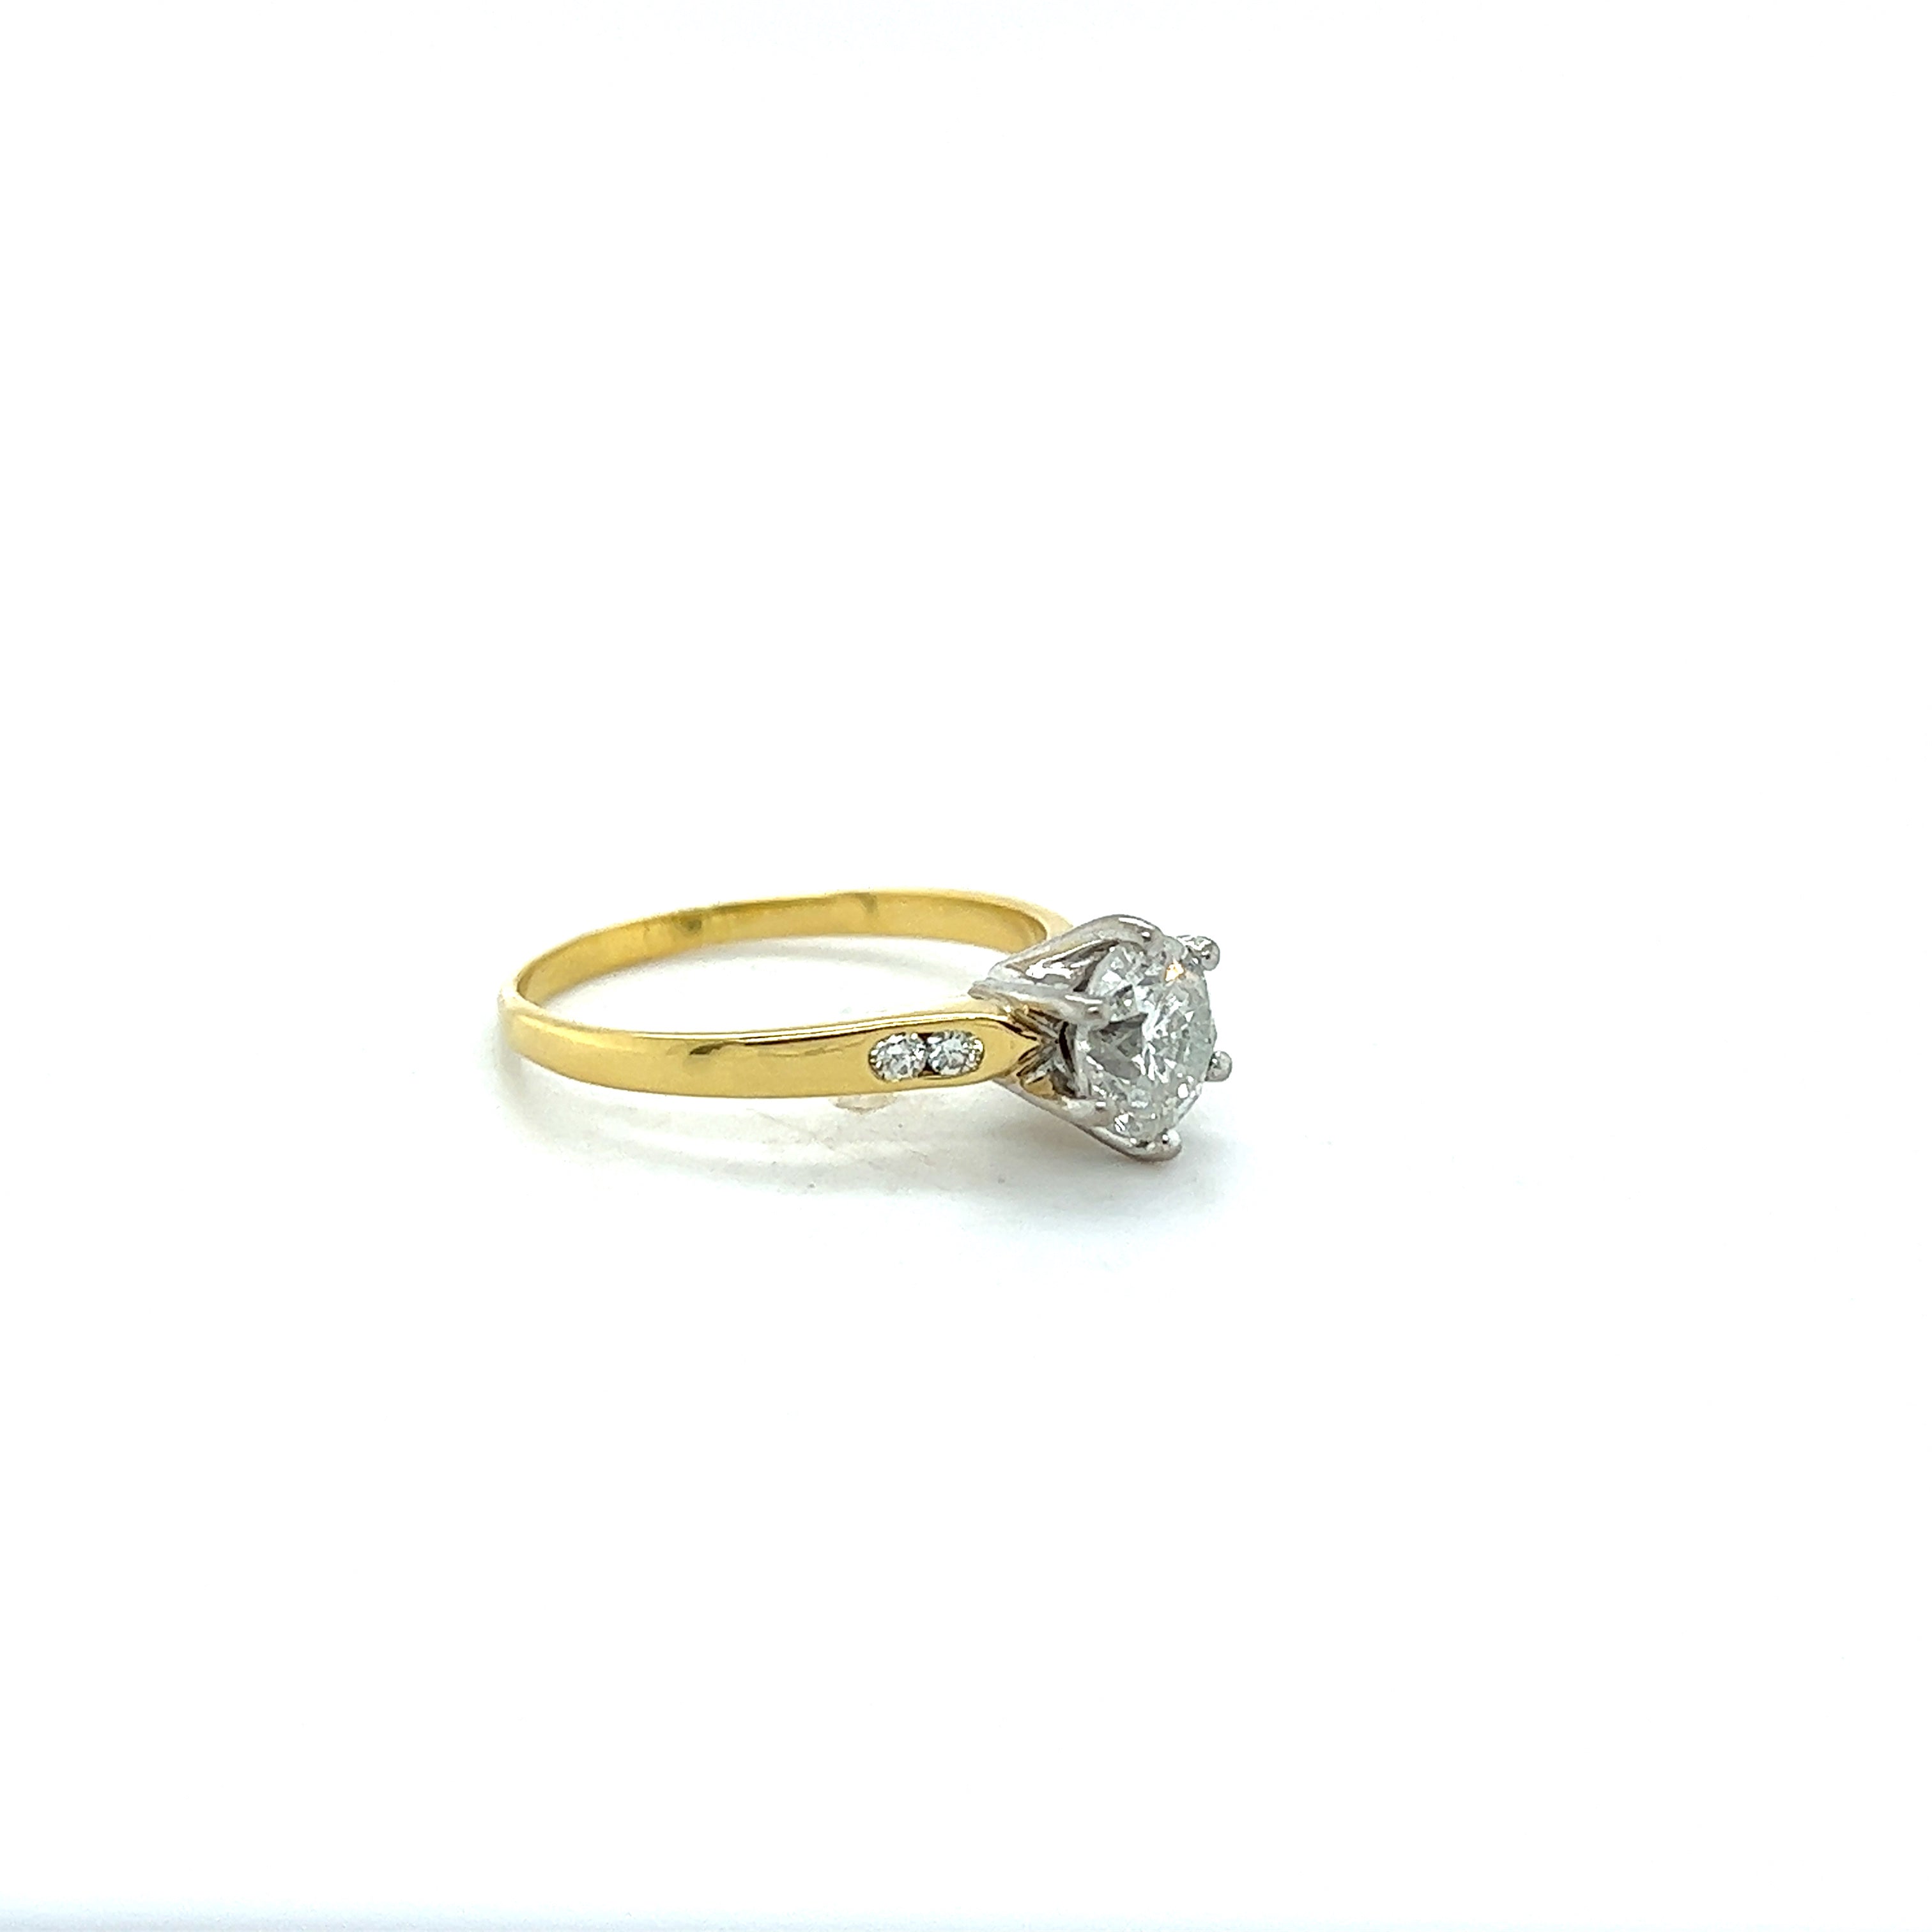 18ct yellow and white gold diamond ring.